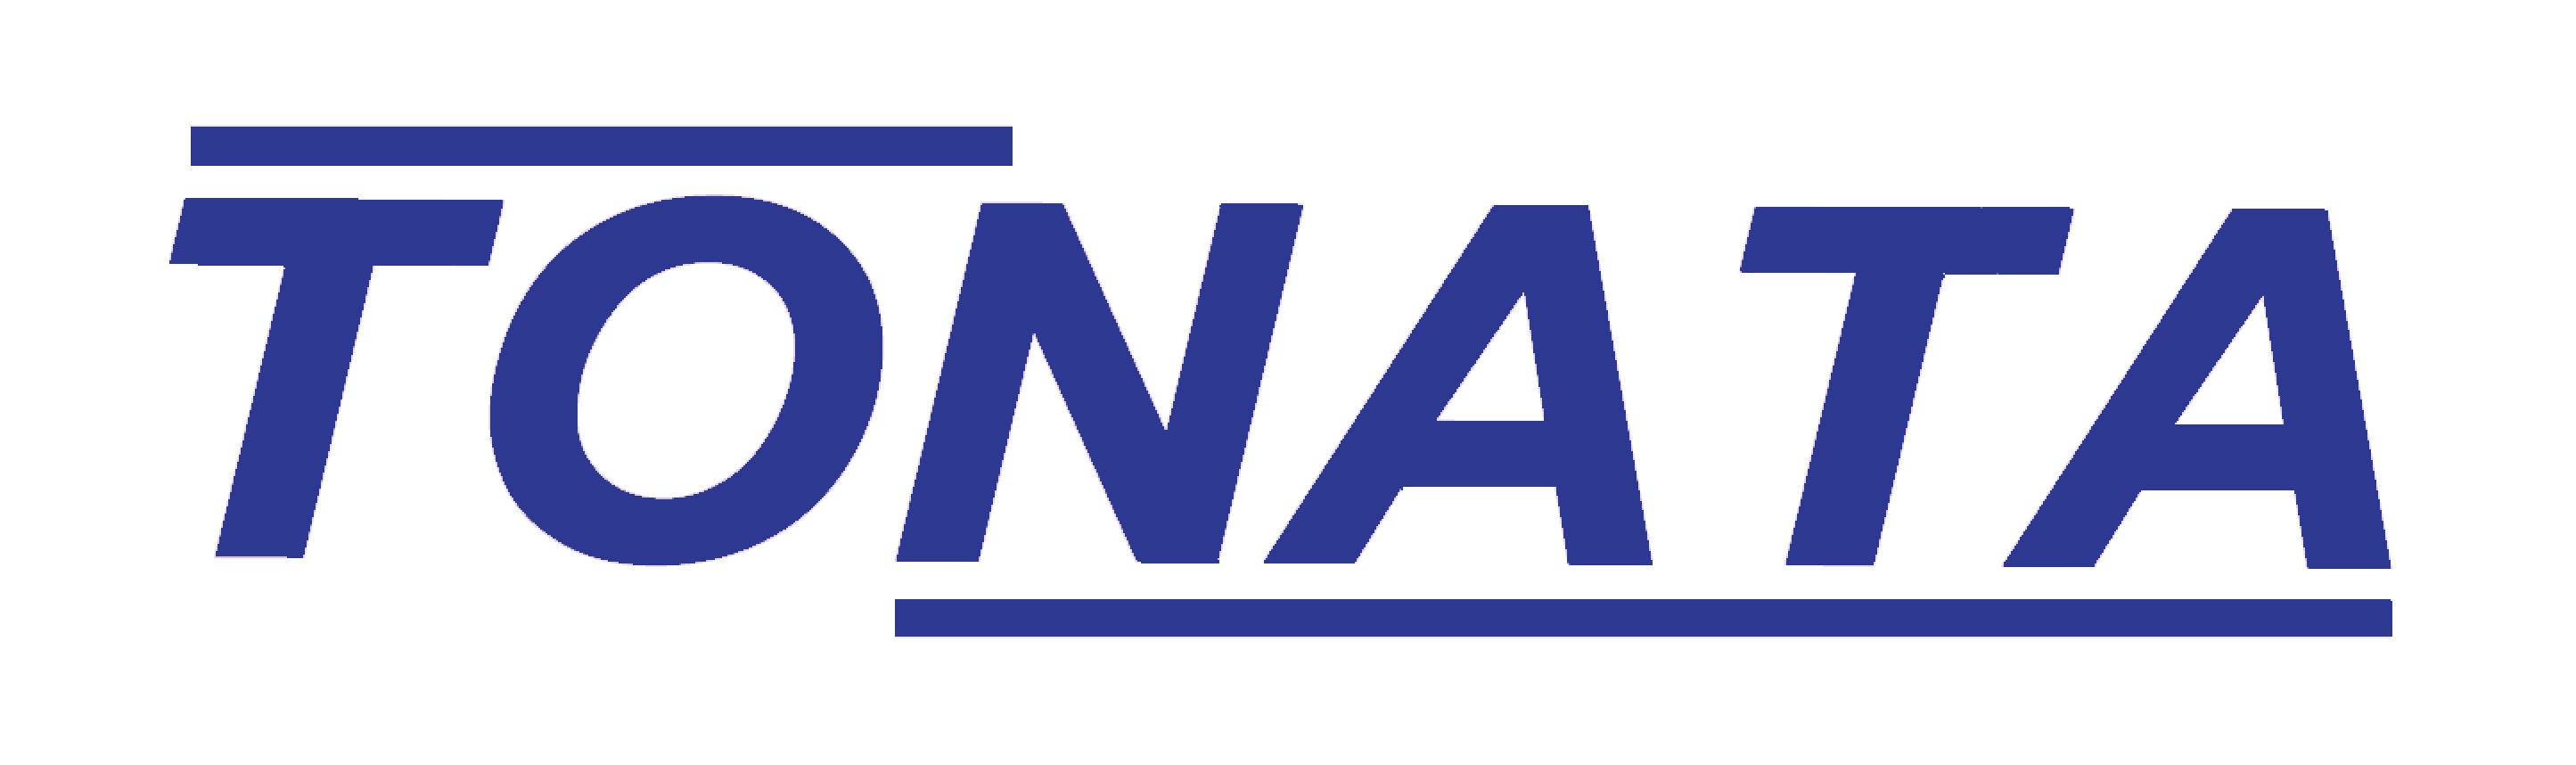 Tonata - Logo